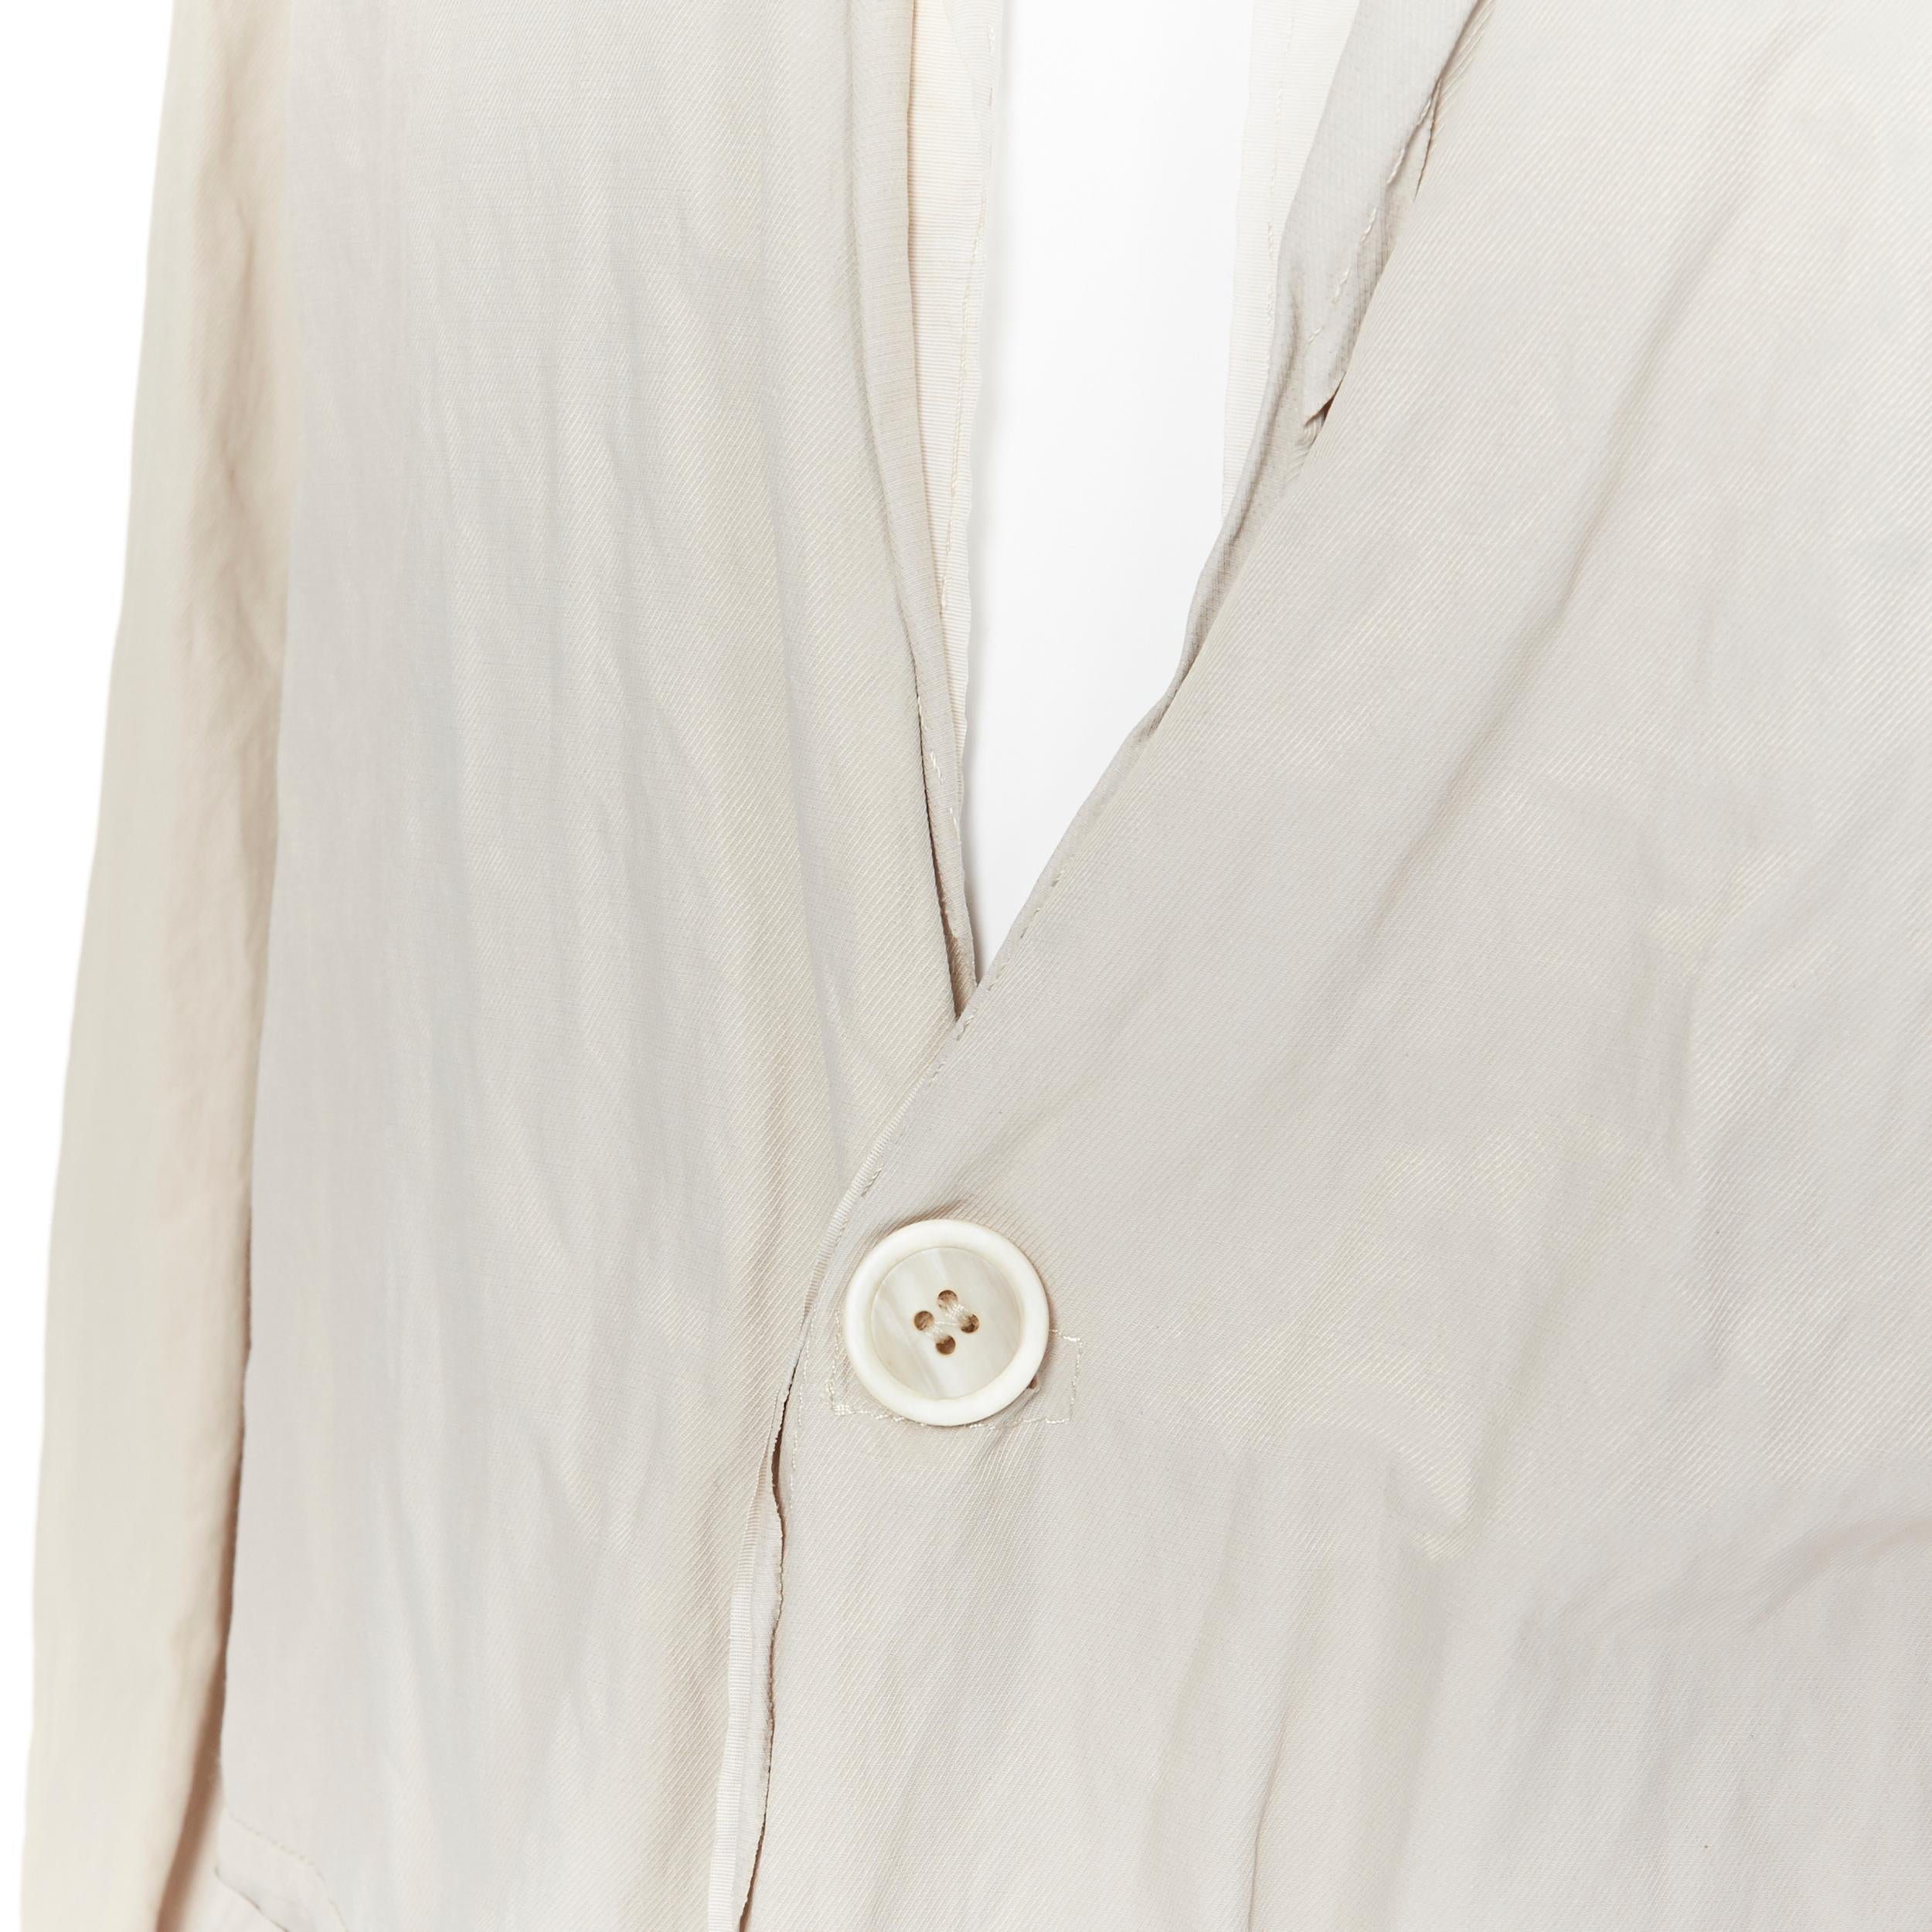 LANVIN Runway light stone coated cotton raw seam summer blazer jacket EU50 L
Brand: Lanvin
Designer: Alber Elbaz
Model Name / Style: Blazer
Material: Cotton  blend
Color: Beige
Pattern: Solid
Closure: Button
Extra Detail: Long sleeve. Collared